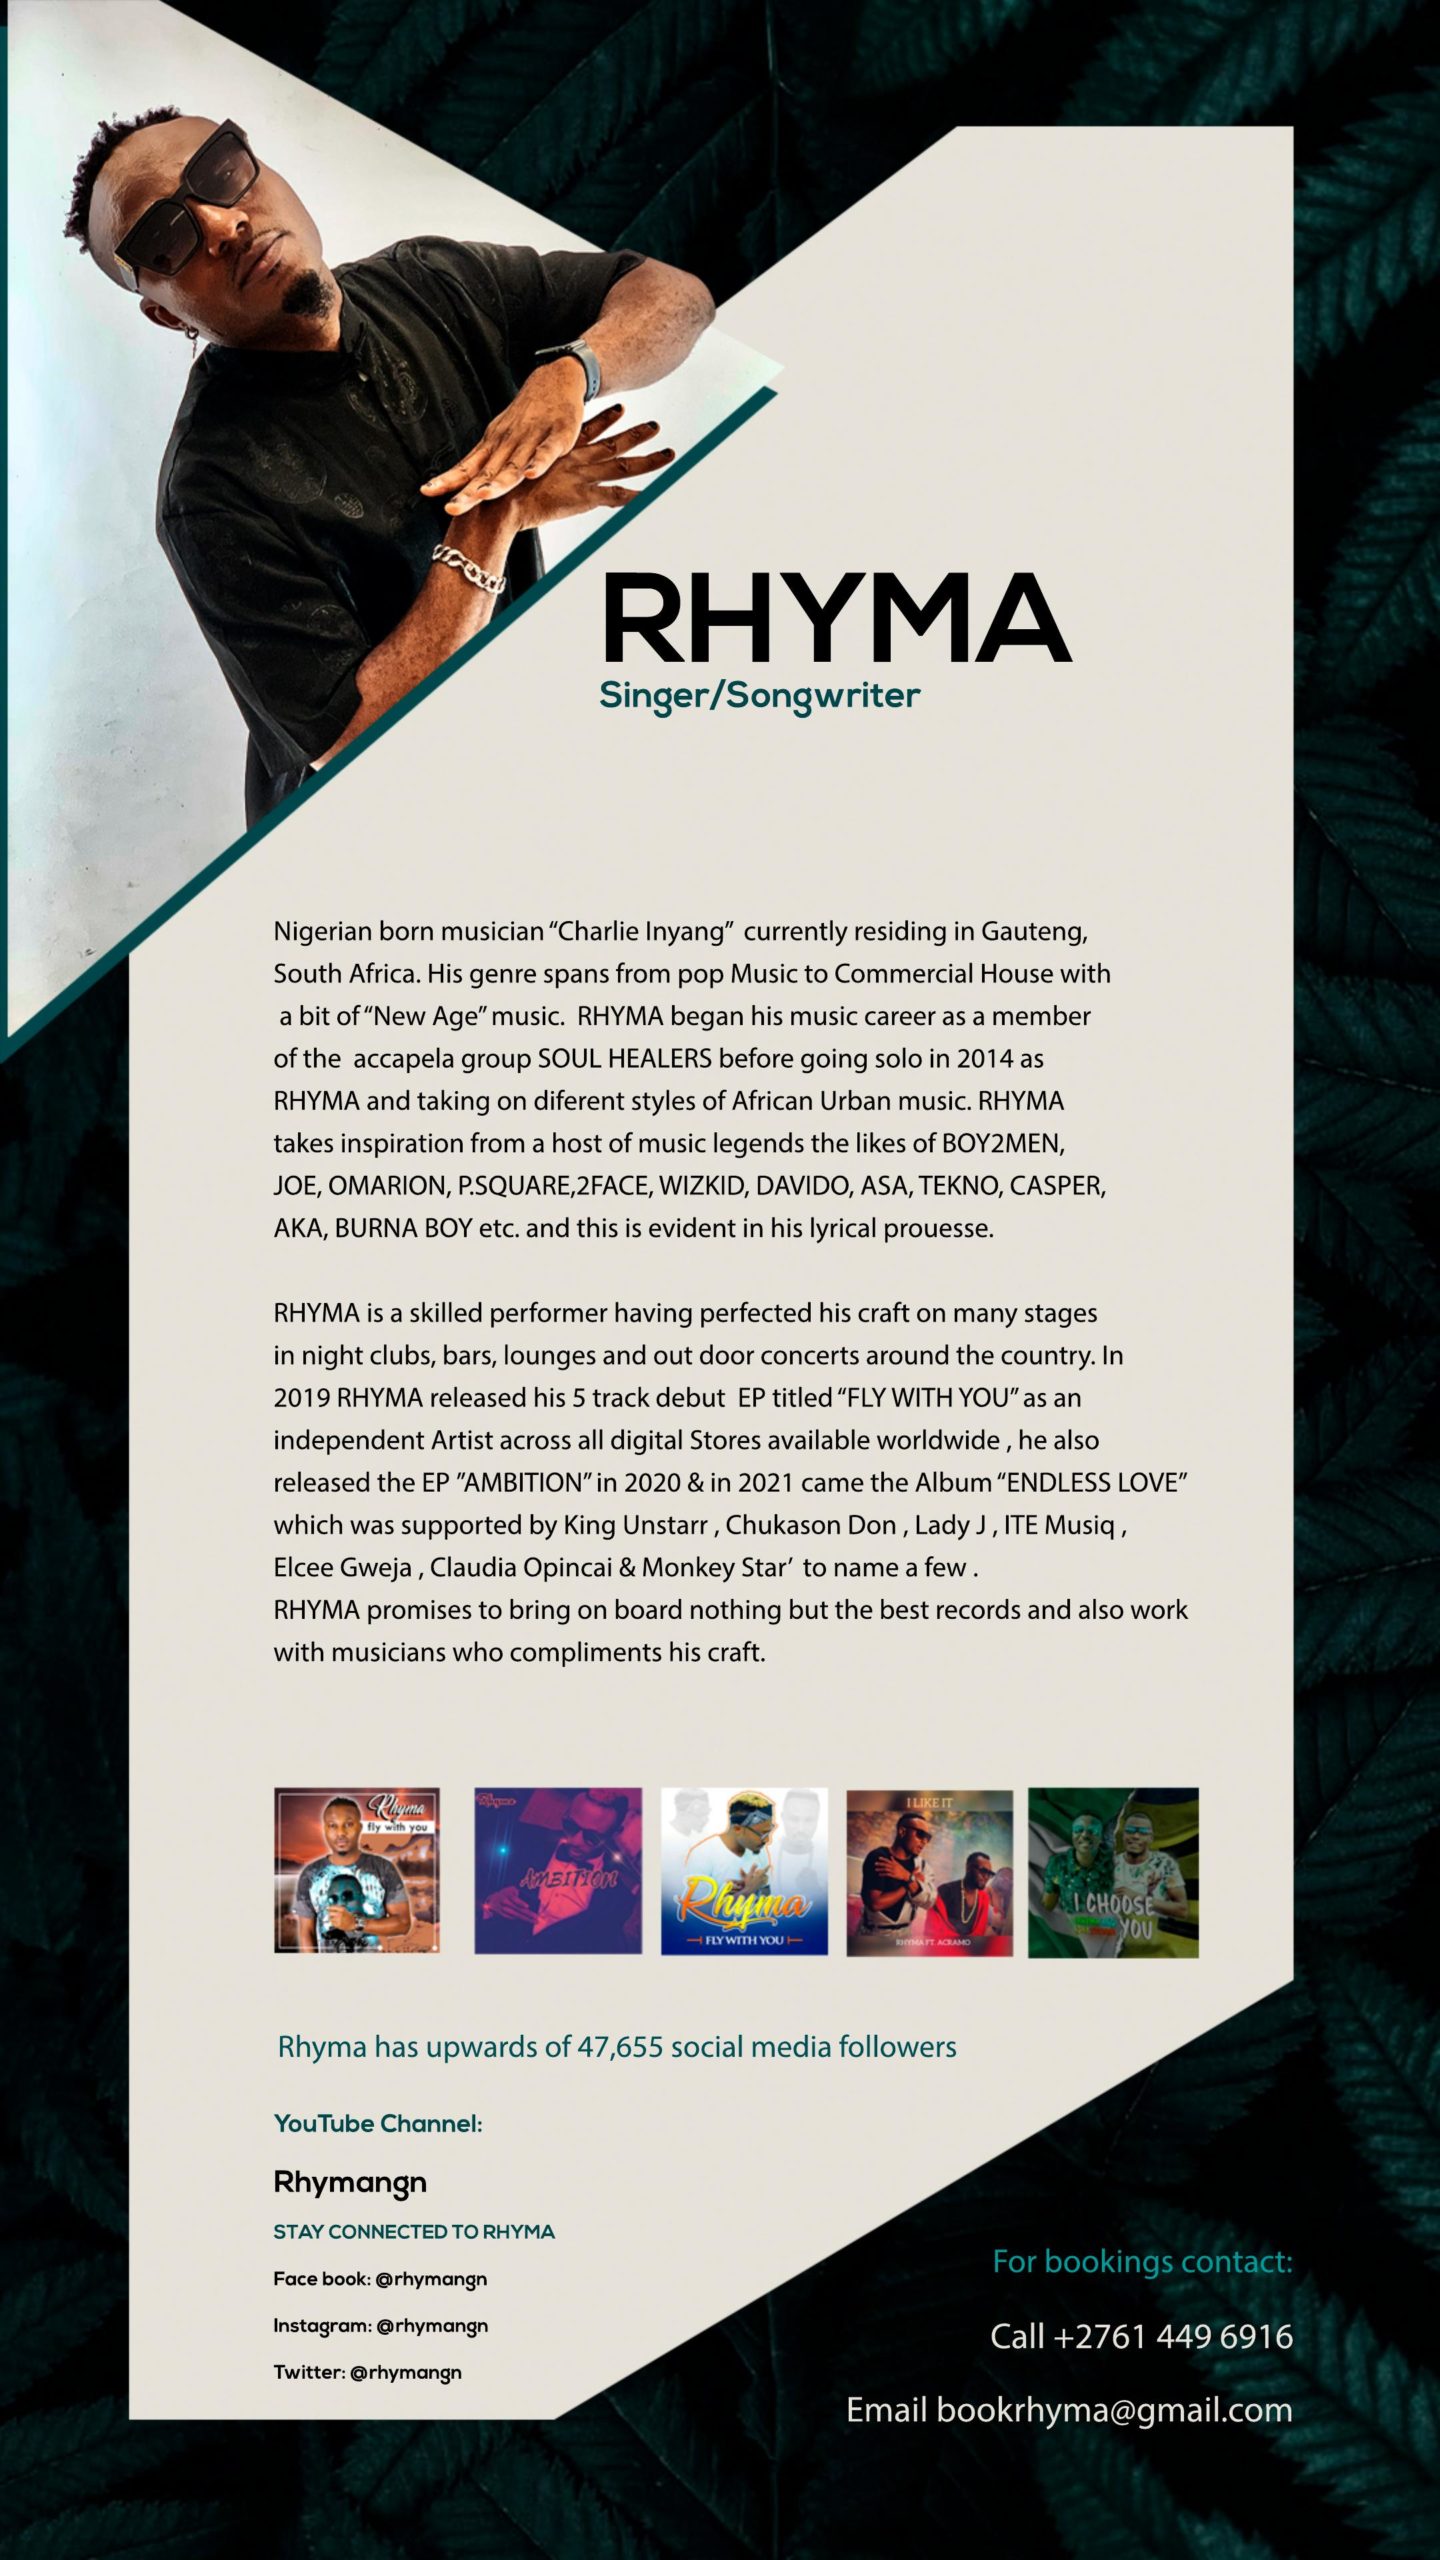 Introducing Nigerian Singer / Songwriter, Rhyma